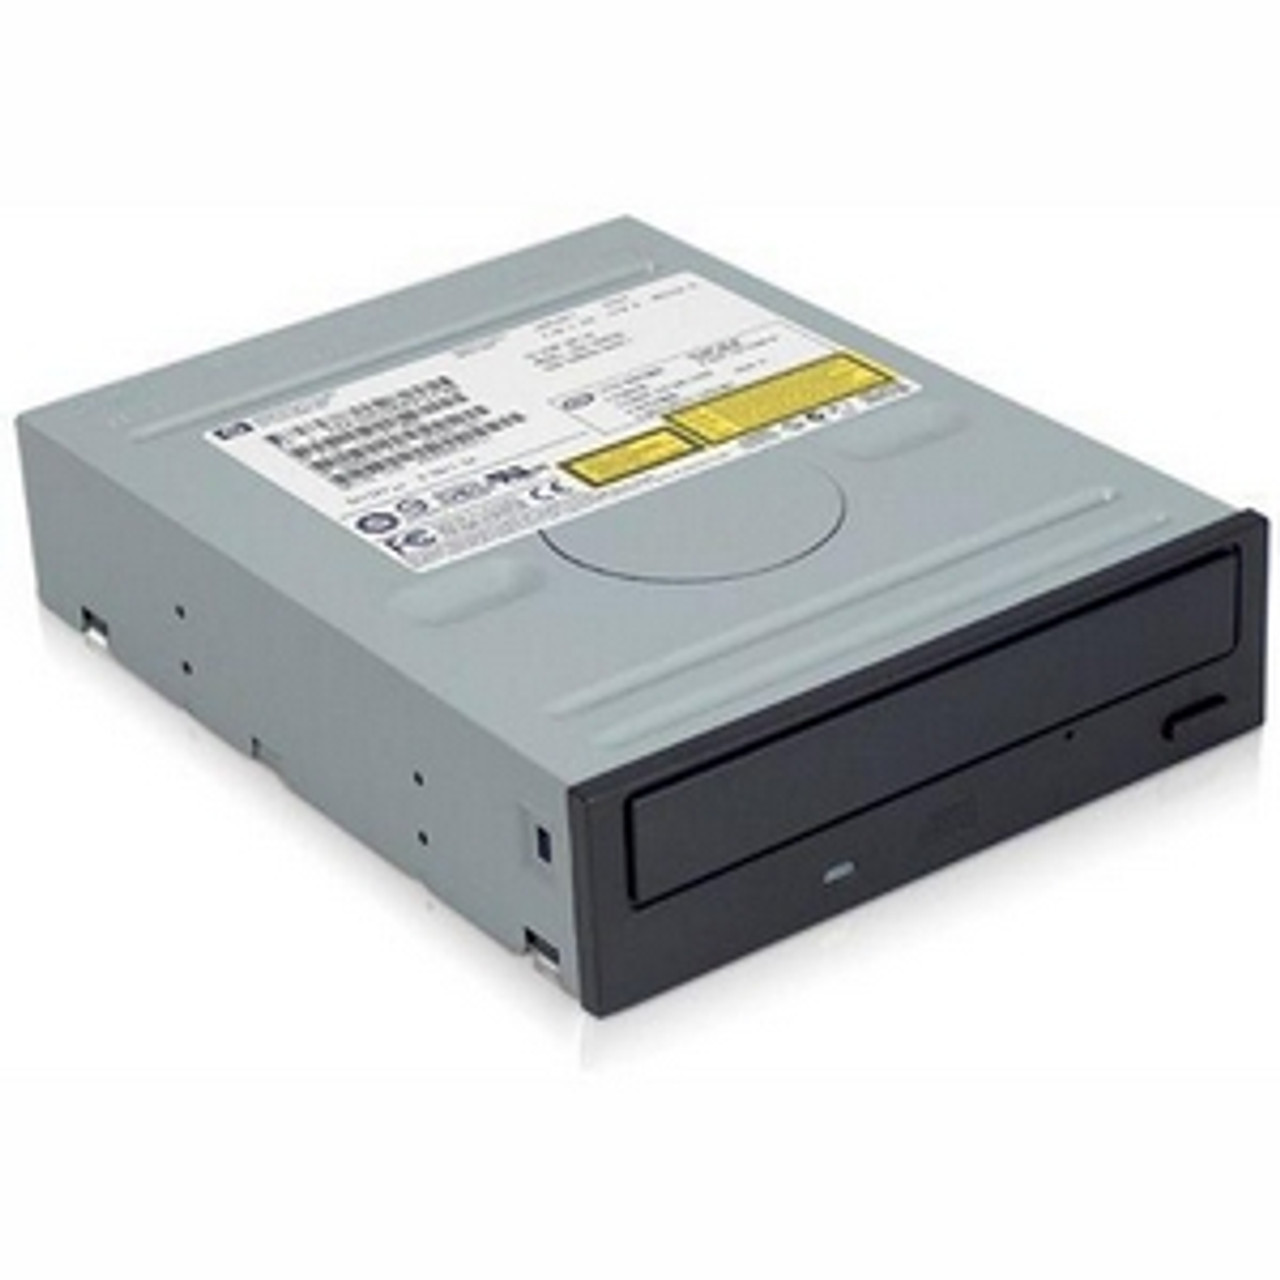 F2017B - HP 24x CD-ROM Drive for Omnibook 6x00/500